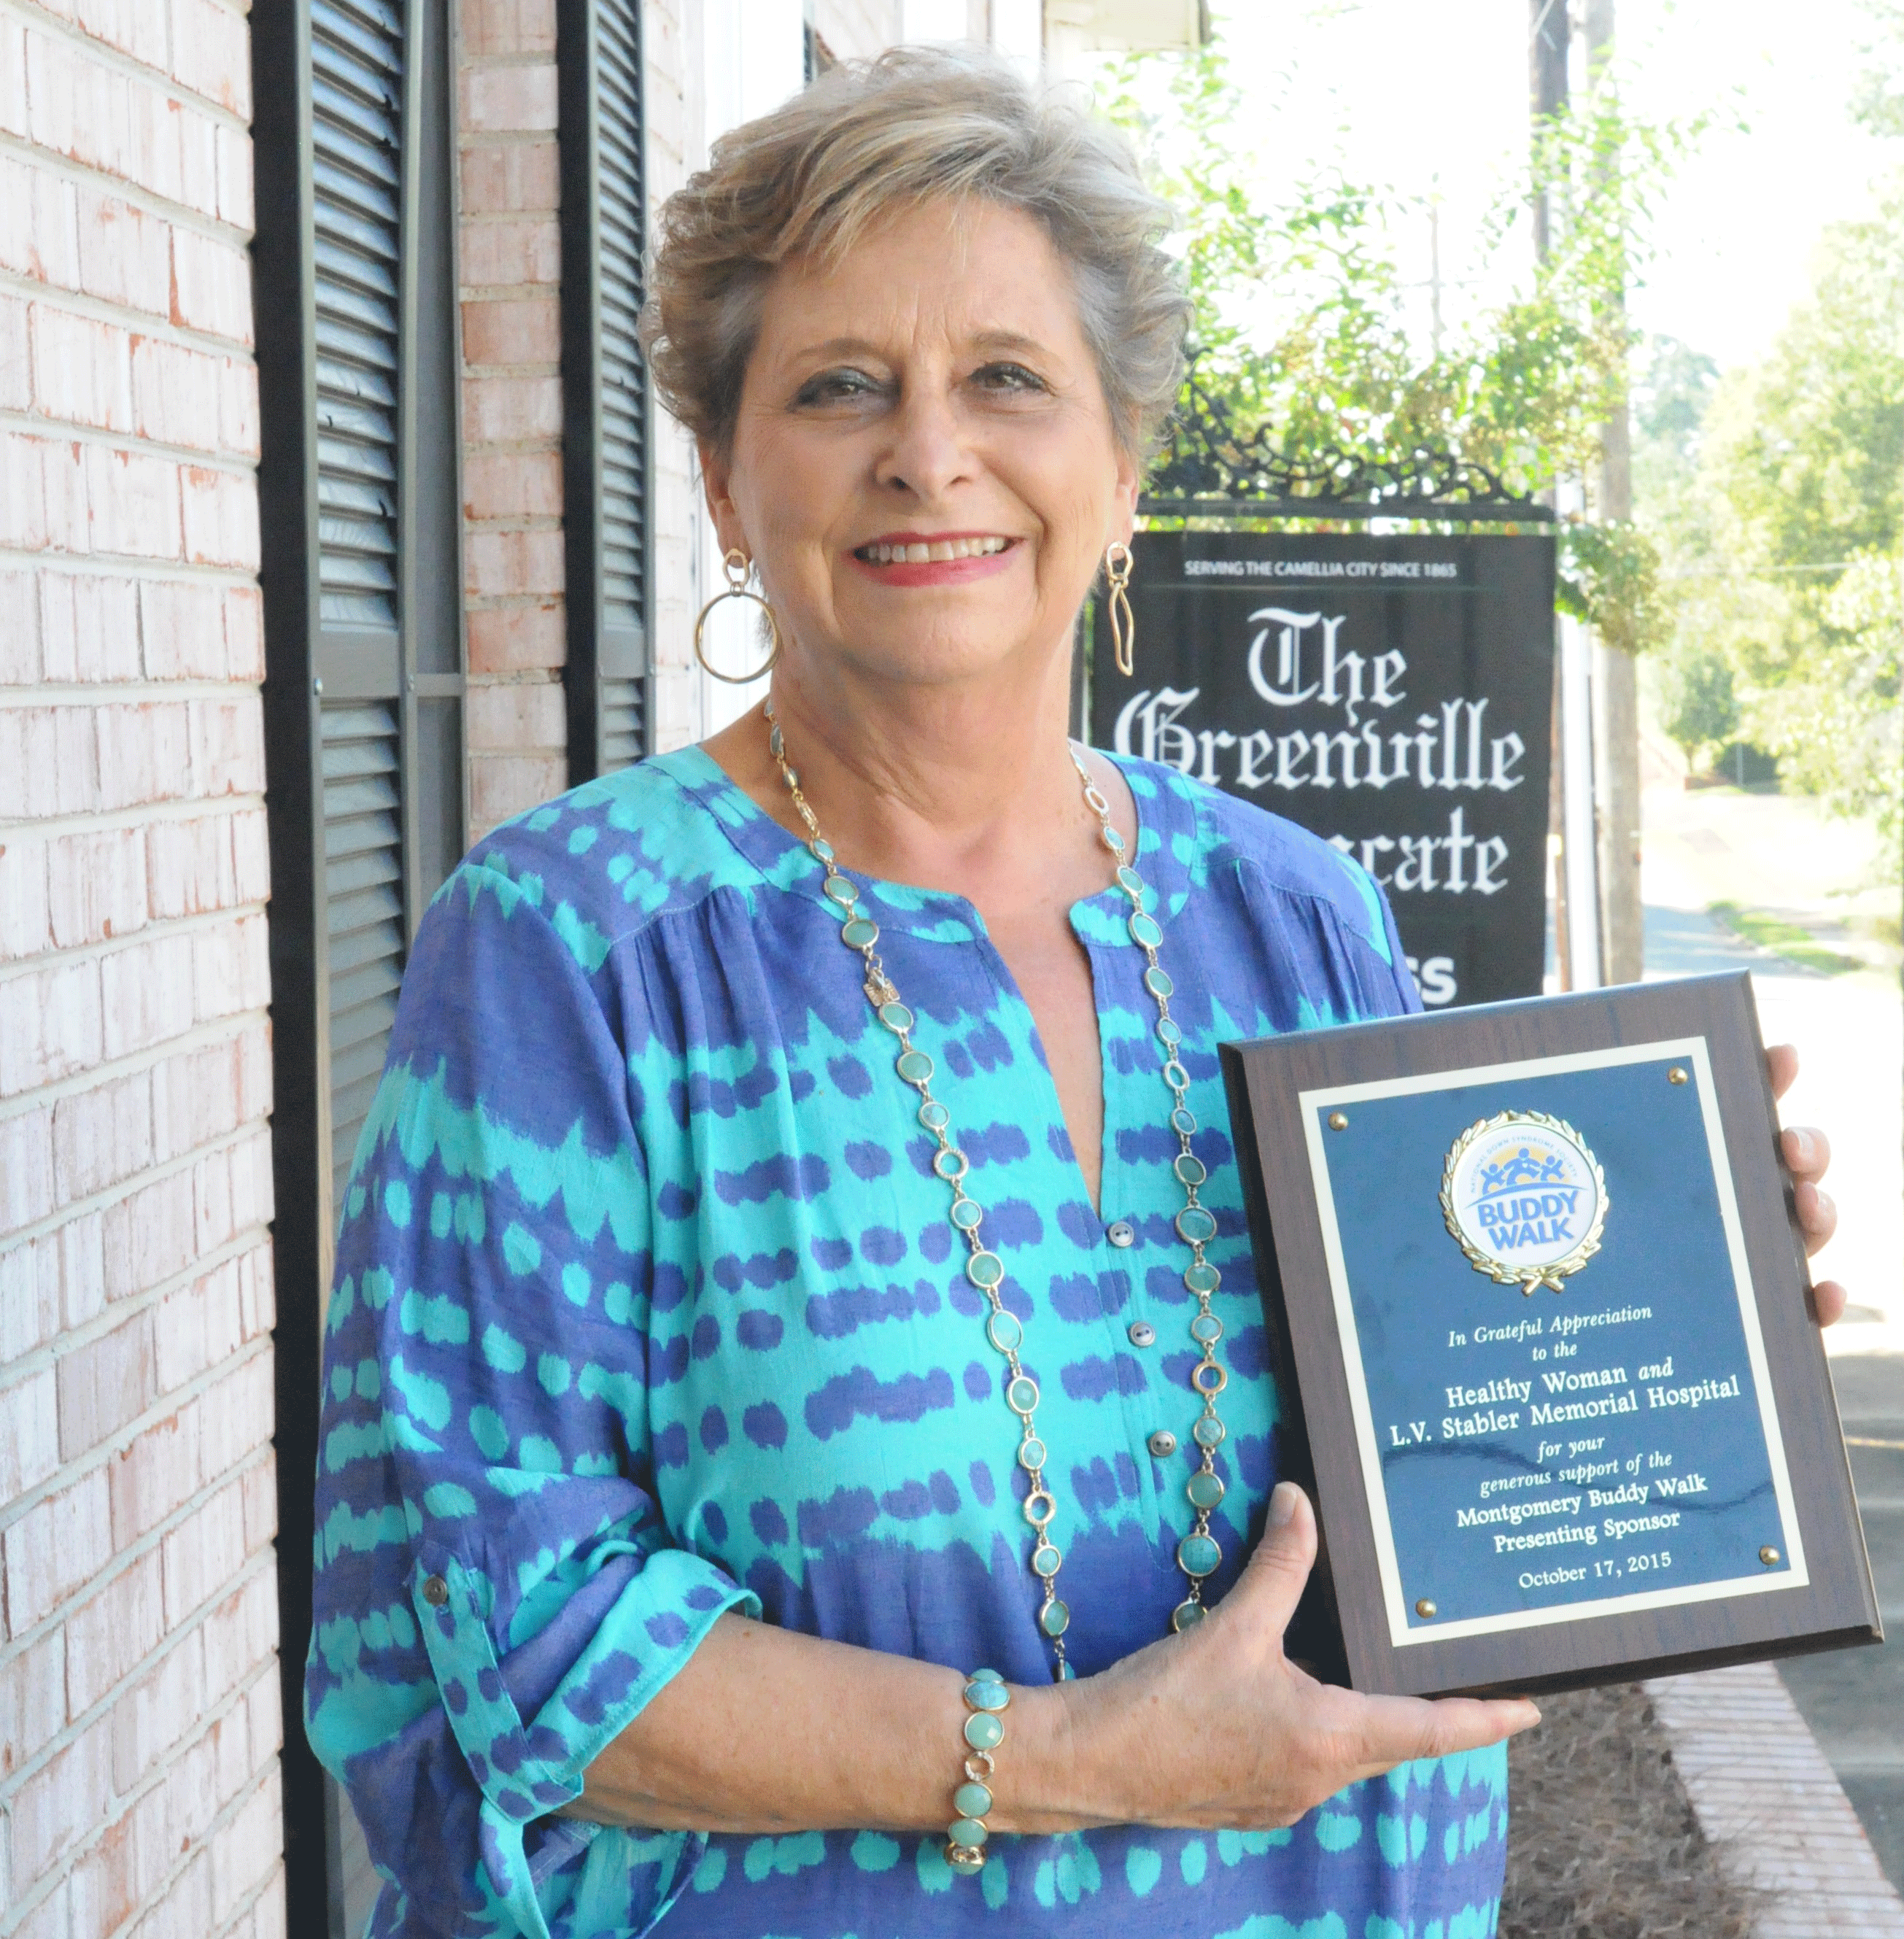 Linda Hummel, coordinator for the L..V. Stabler Memorial Hospital Healthy Woman program, displays a plaque signifying the hospital’s sponsorship of Buddy Walk.